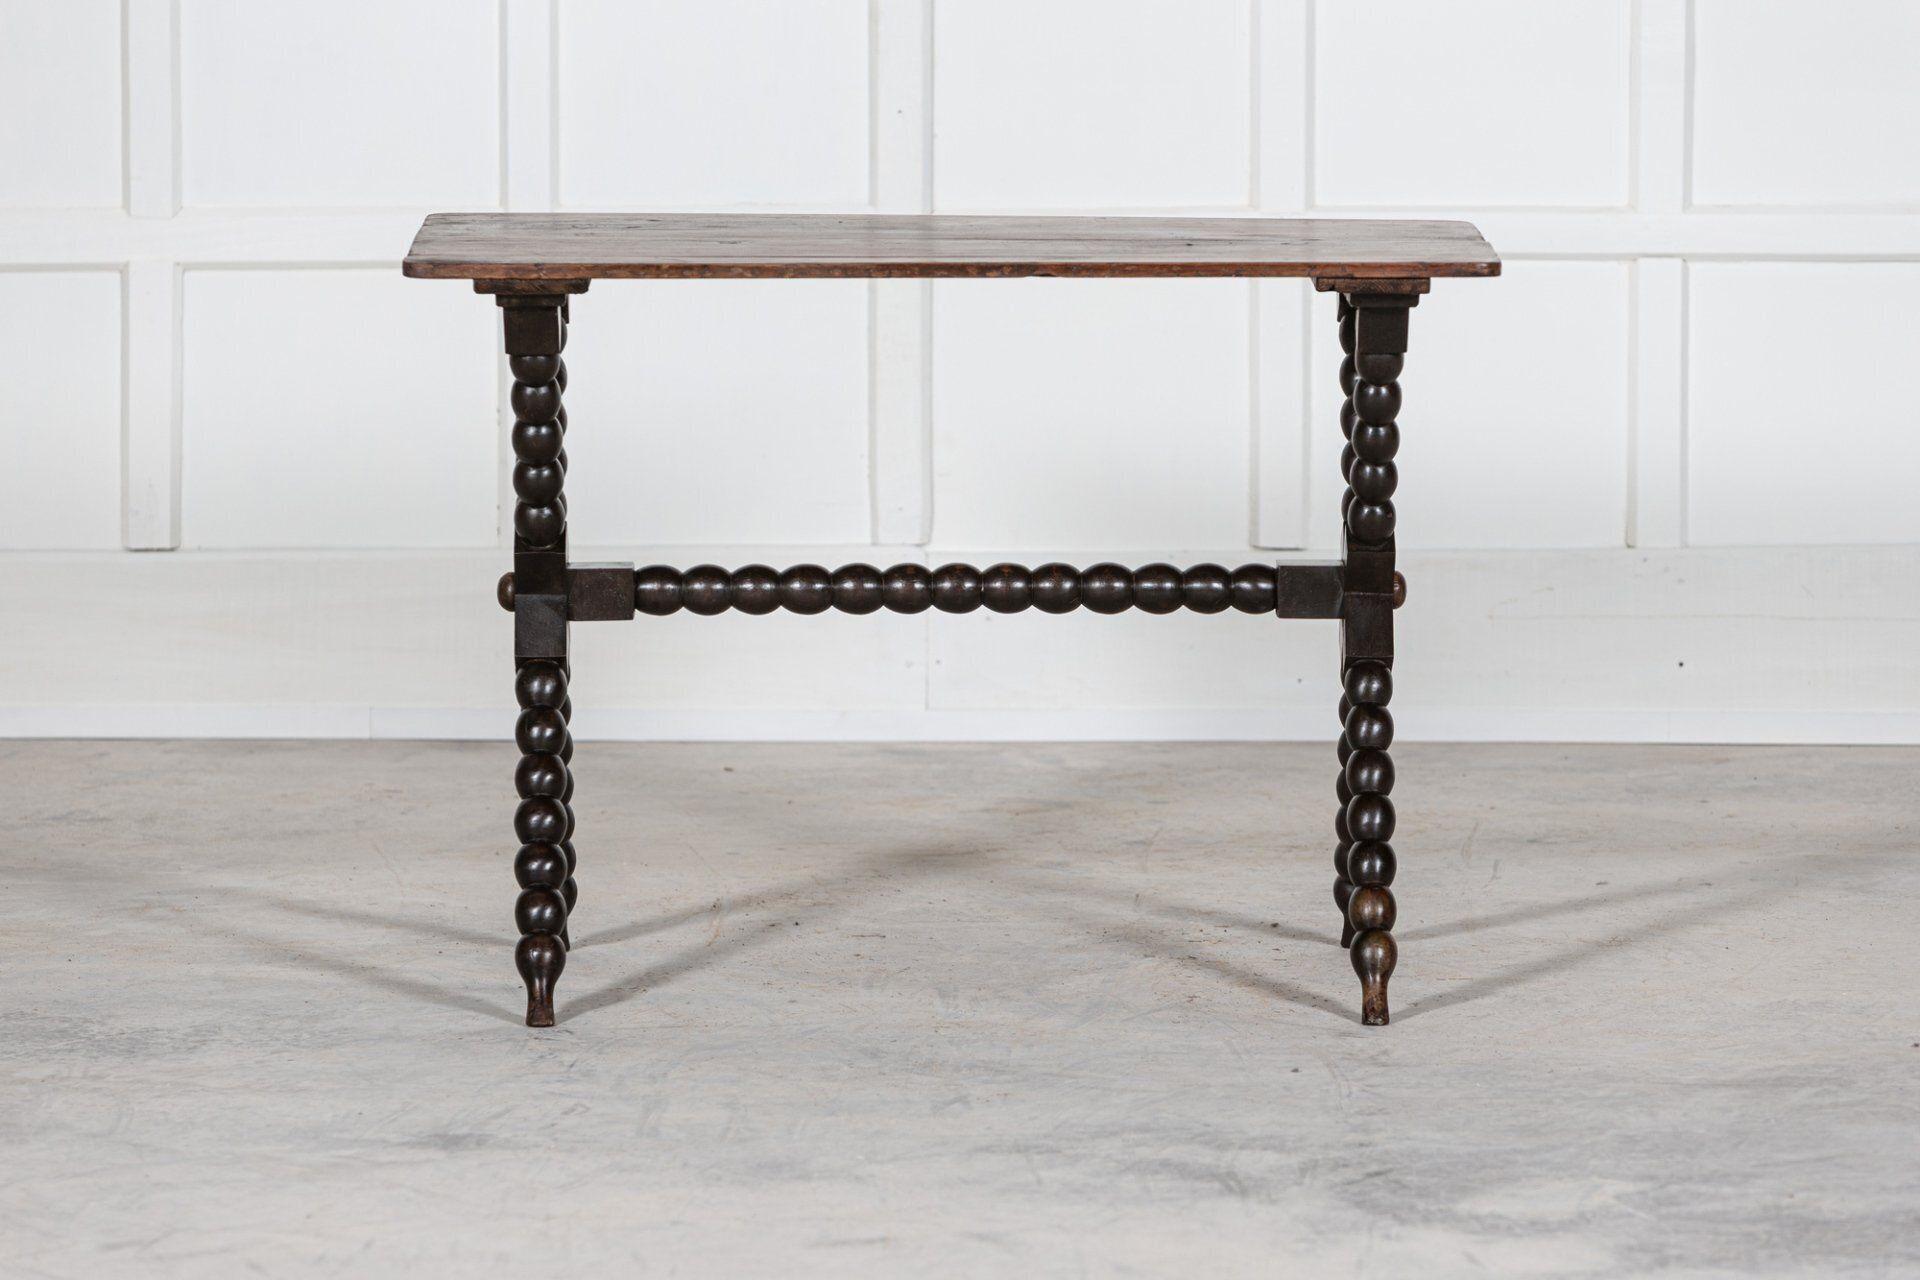 Circa 1870
19thC English Ebonised Pine Bobbin Table / Desk

Measures: W98 x D52 x H70cm.